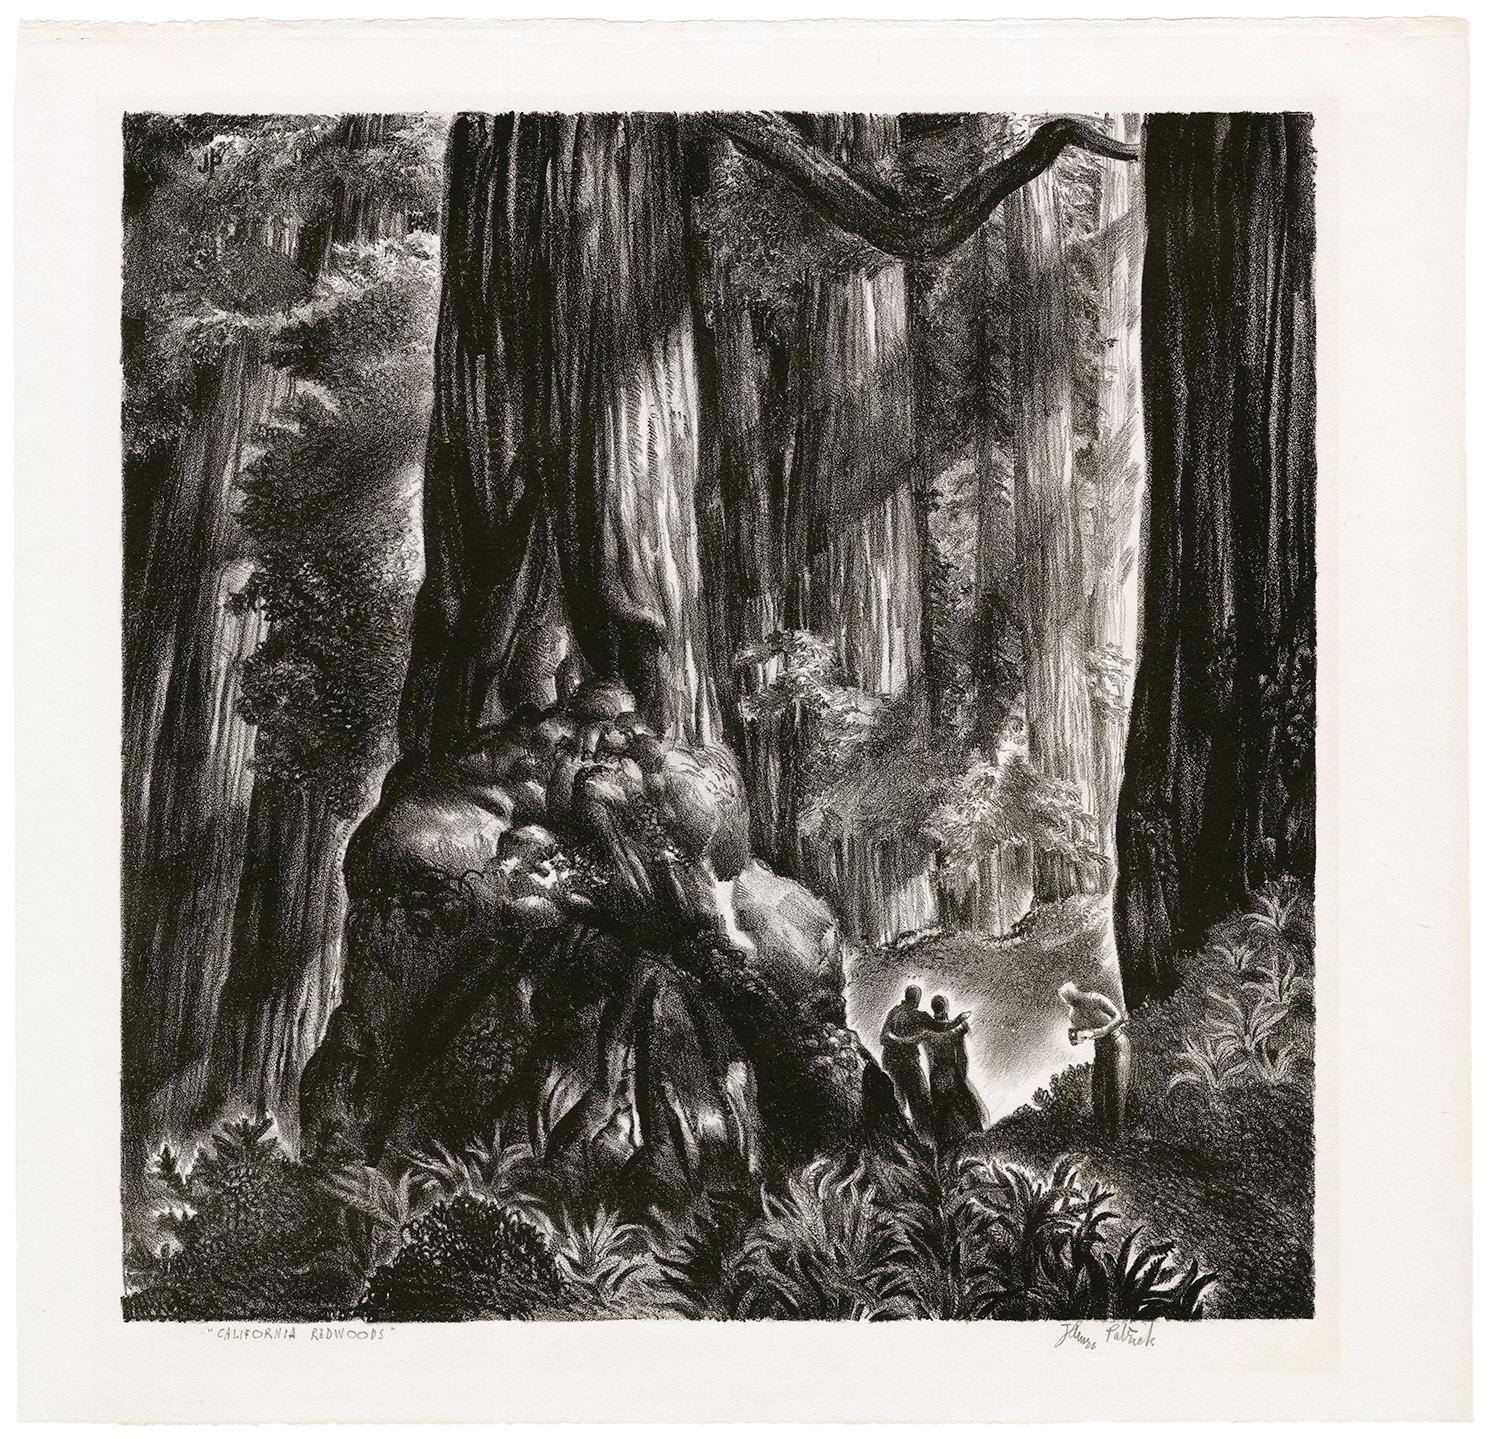 'California Redwoods' — 1940s American Realism - Print by James Hollins Patrick